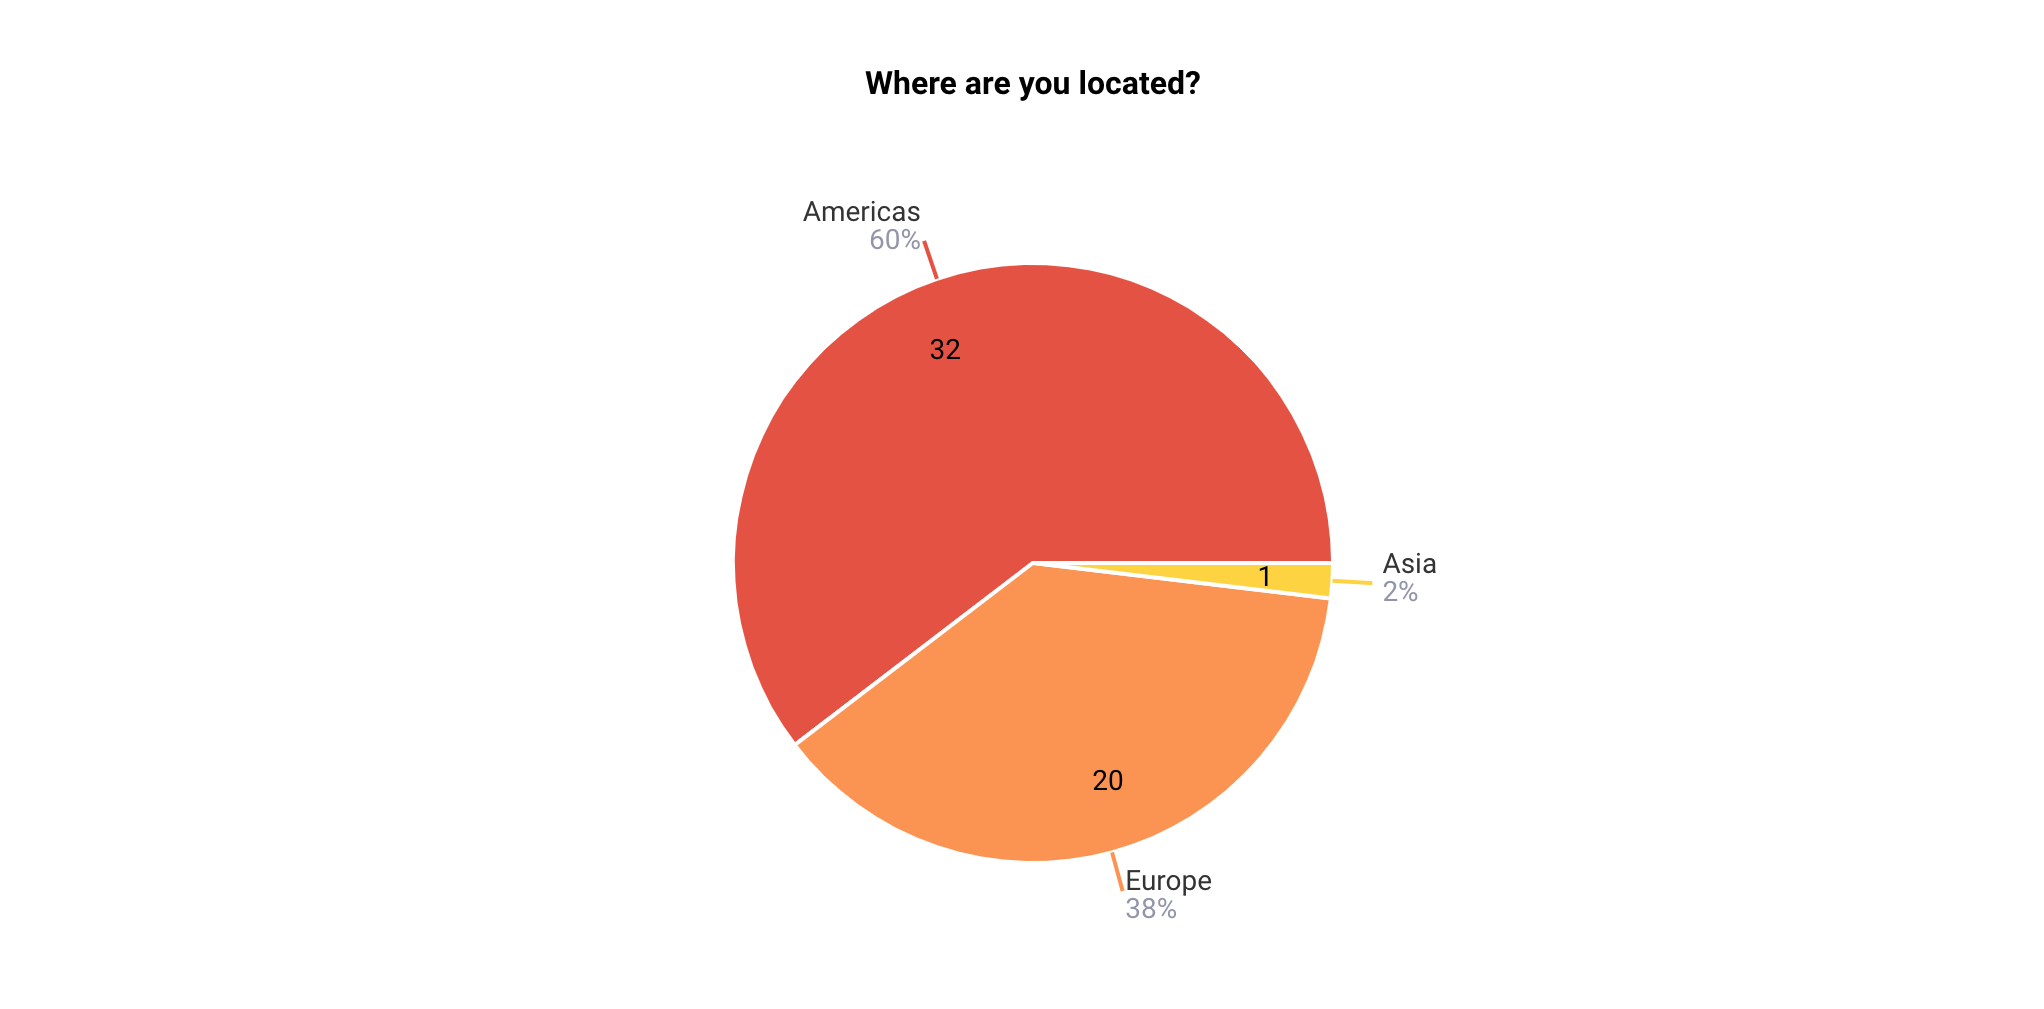 Breakdown of location. 60% Americas, 38% Europe, 2% Asia.